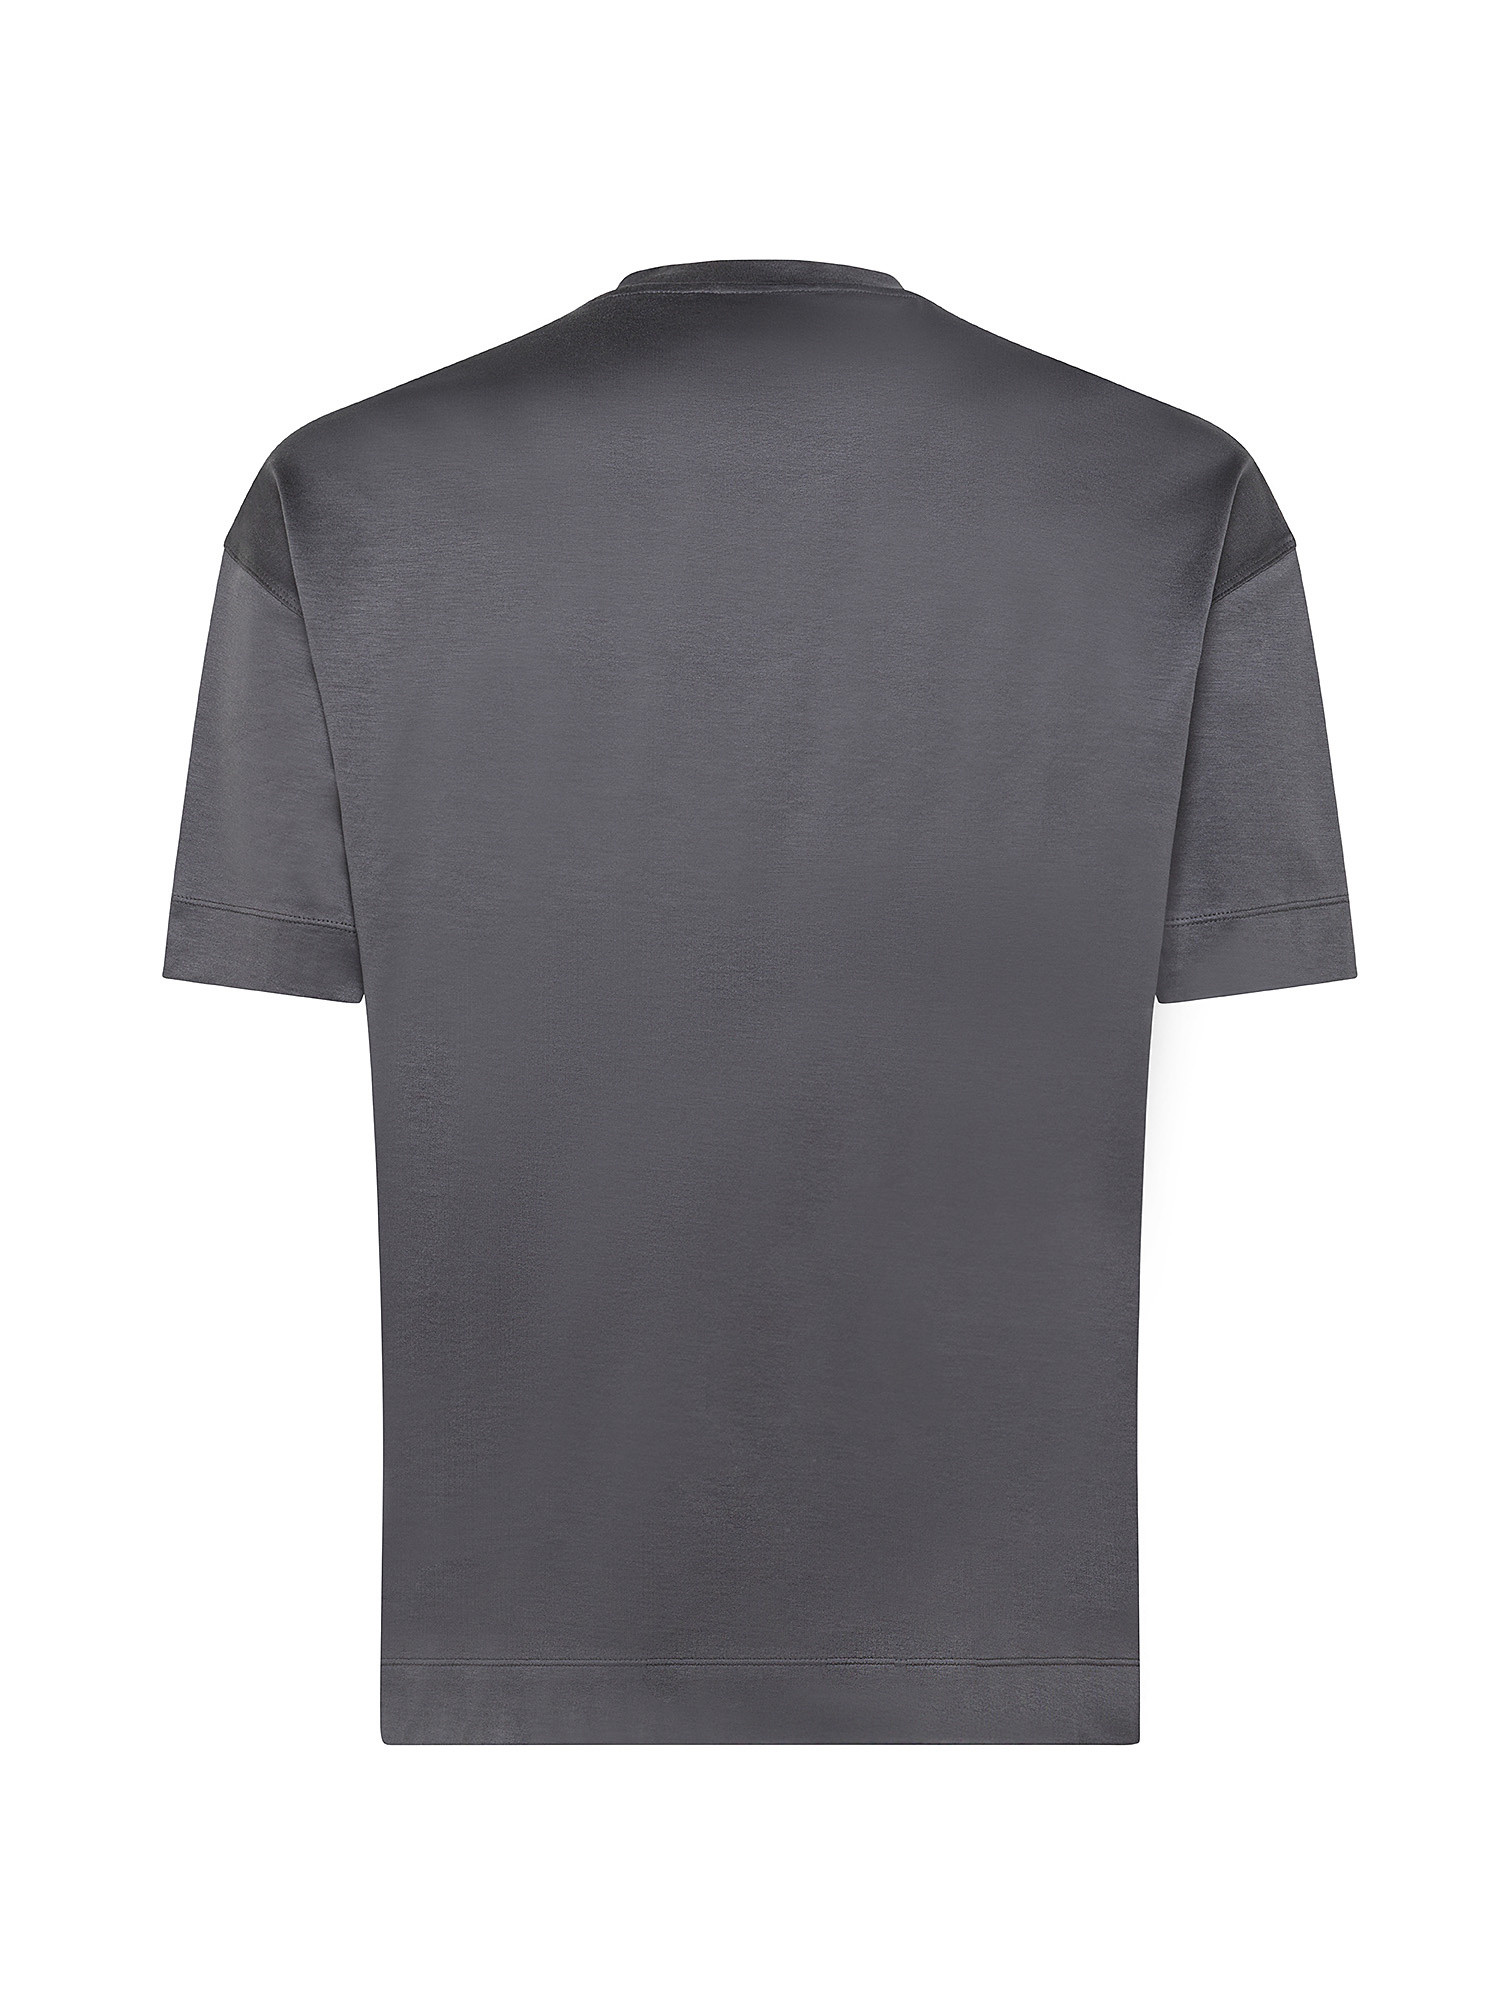 Emporio Armani - T-shirt con logo ricamato, Grigio scuro, large image number 1